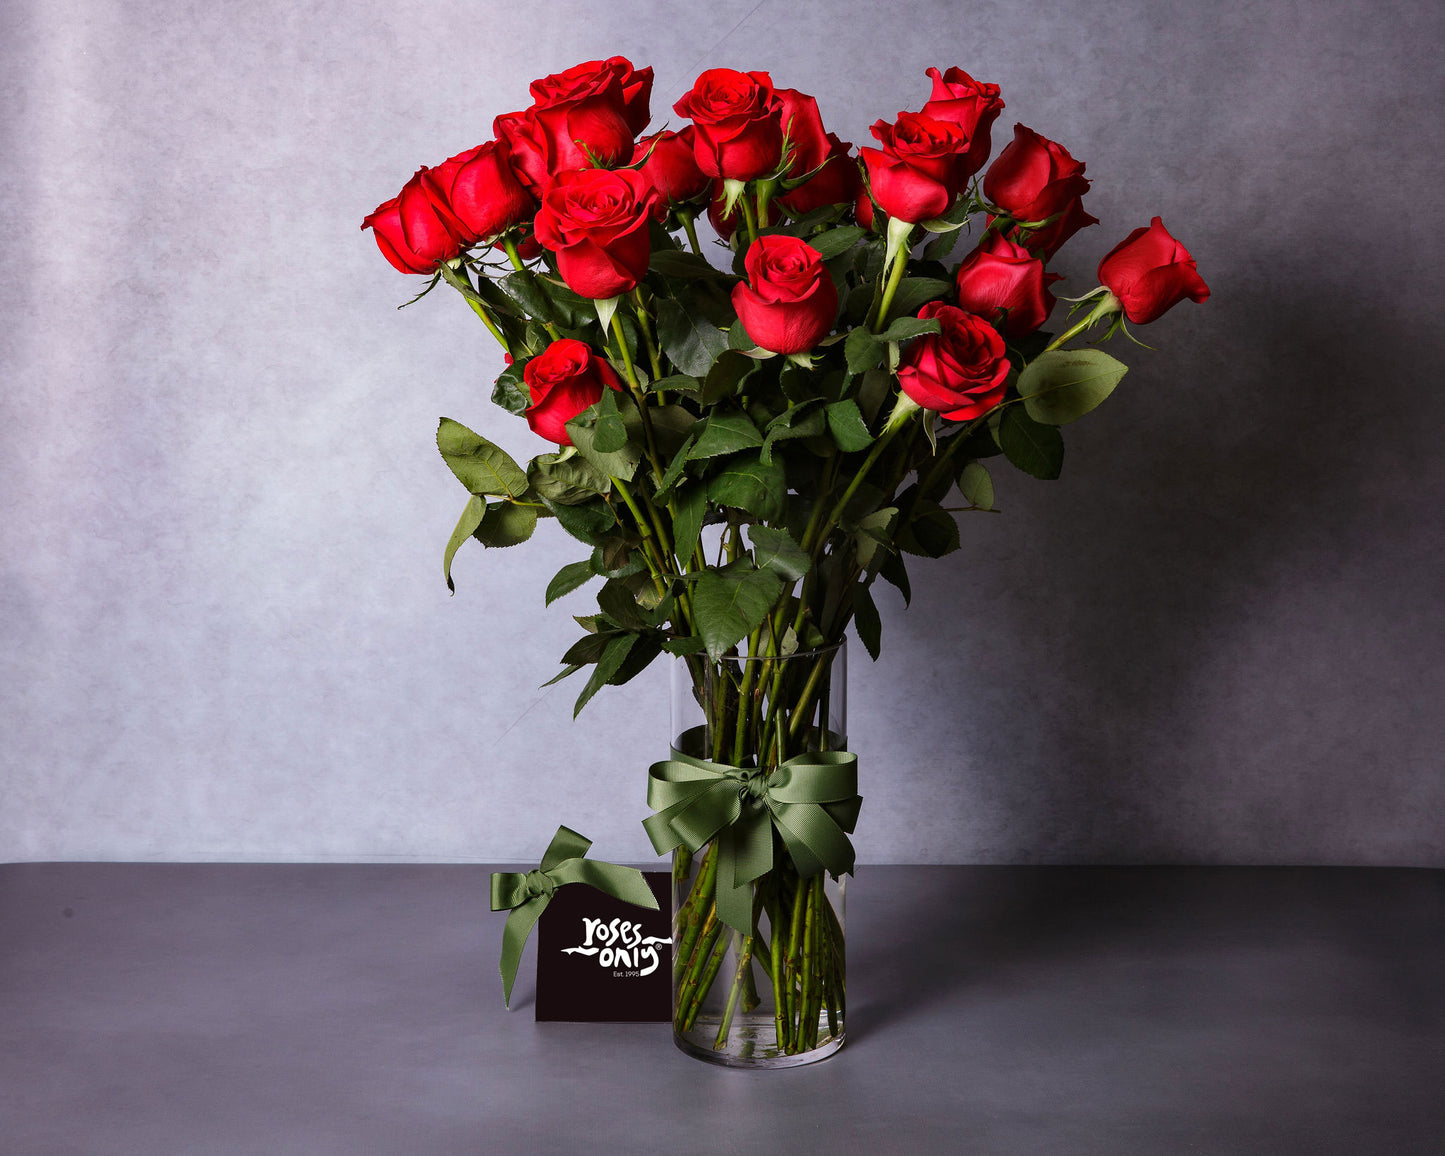 Red Long Stemmed Roses Vase